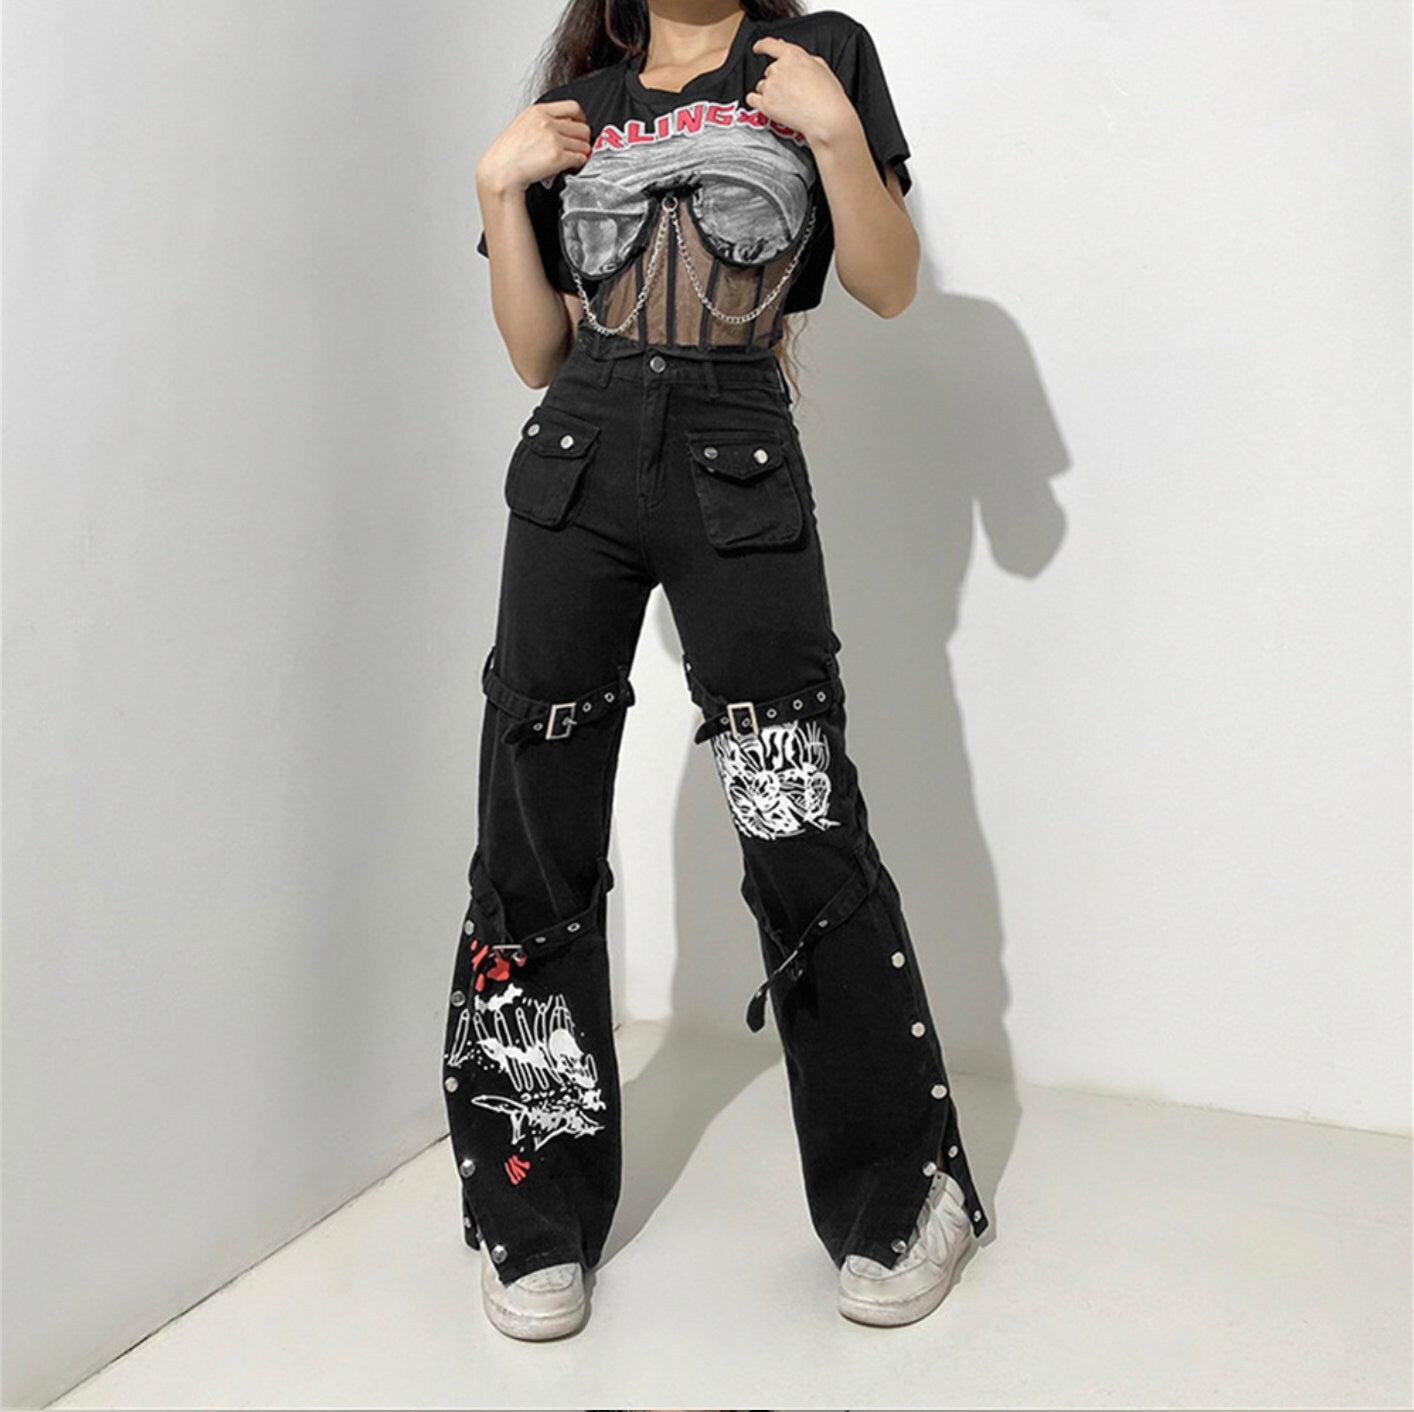 Womens Gothic Emo Alt Cargo Pants skater edgy alt Baggy Jeans mall goth Goth Punk Black Denim Trousers Cyber Y2k Pants Academic Dark Clothes # 201